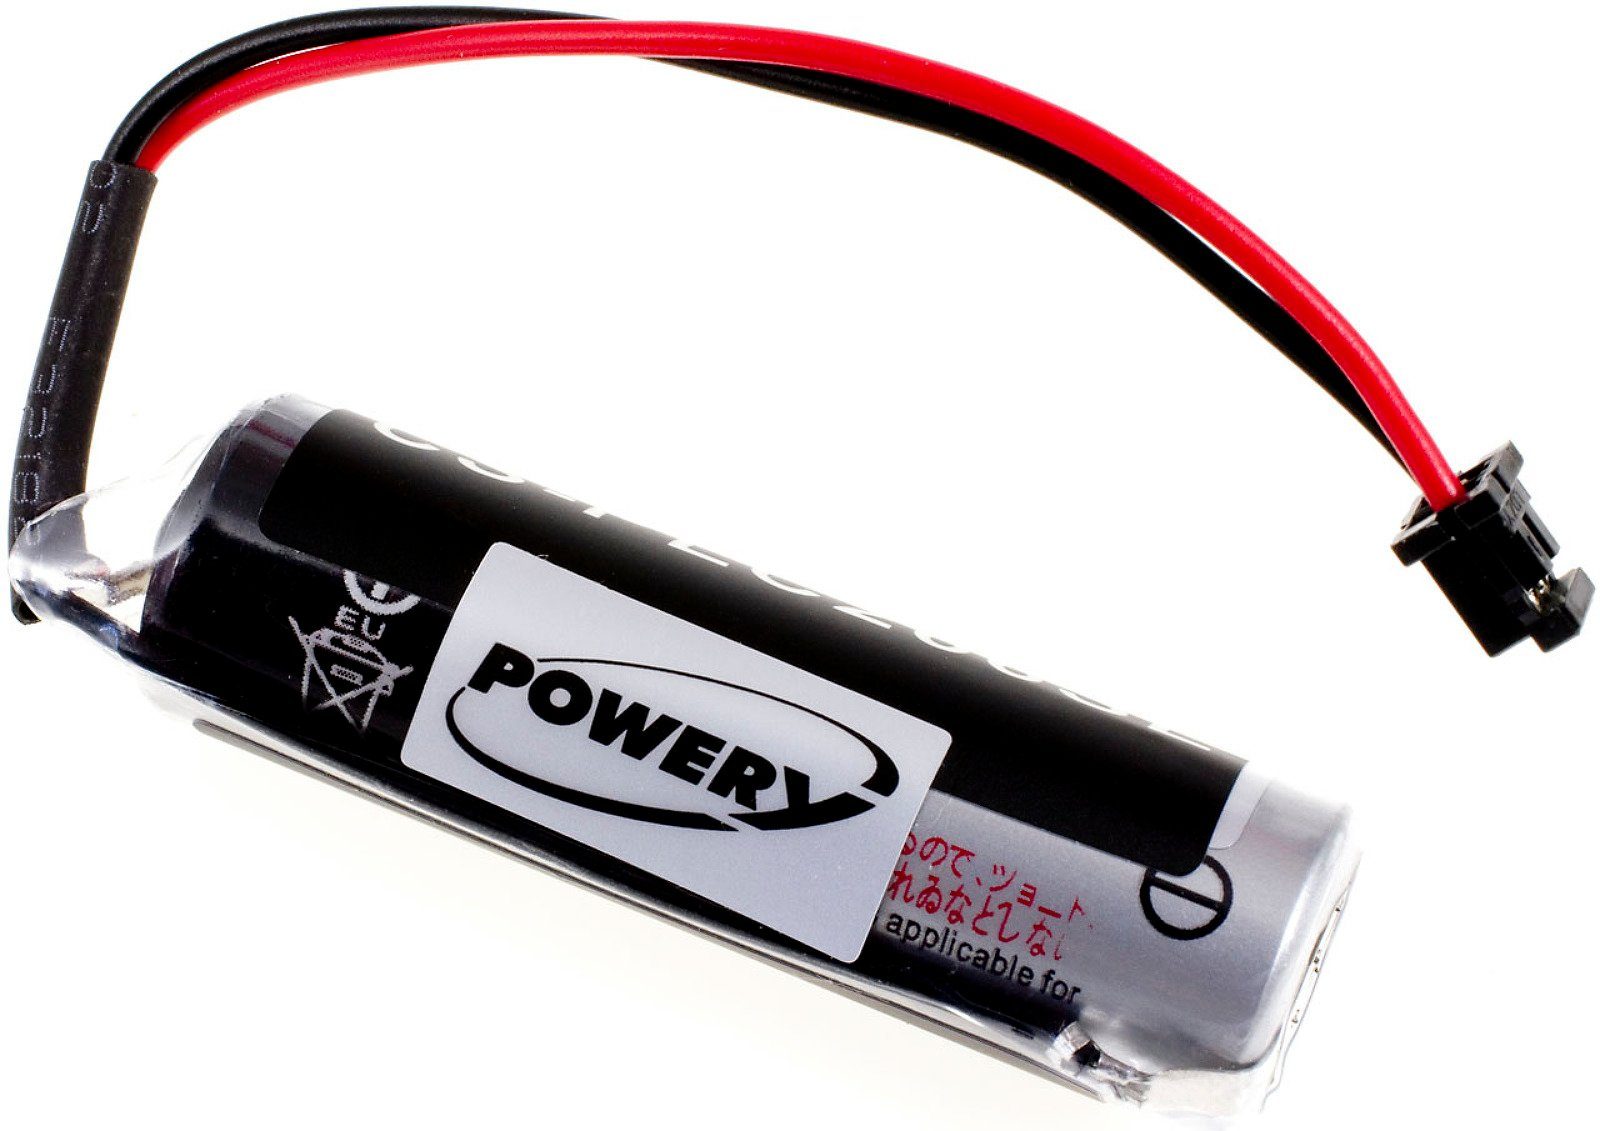 Toshiba (3.6 ER6VC119A Powery SPS-Lithiumbatterie V) Batterie, für